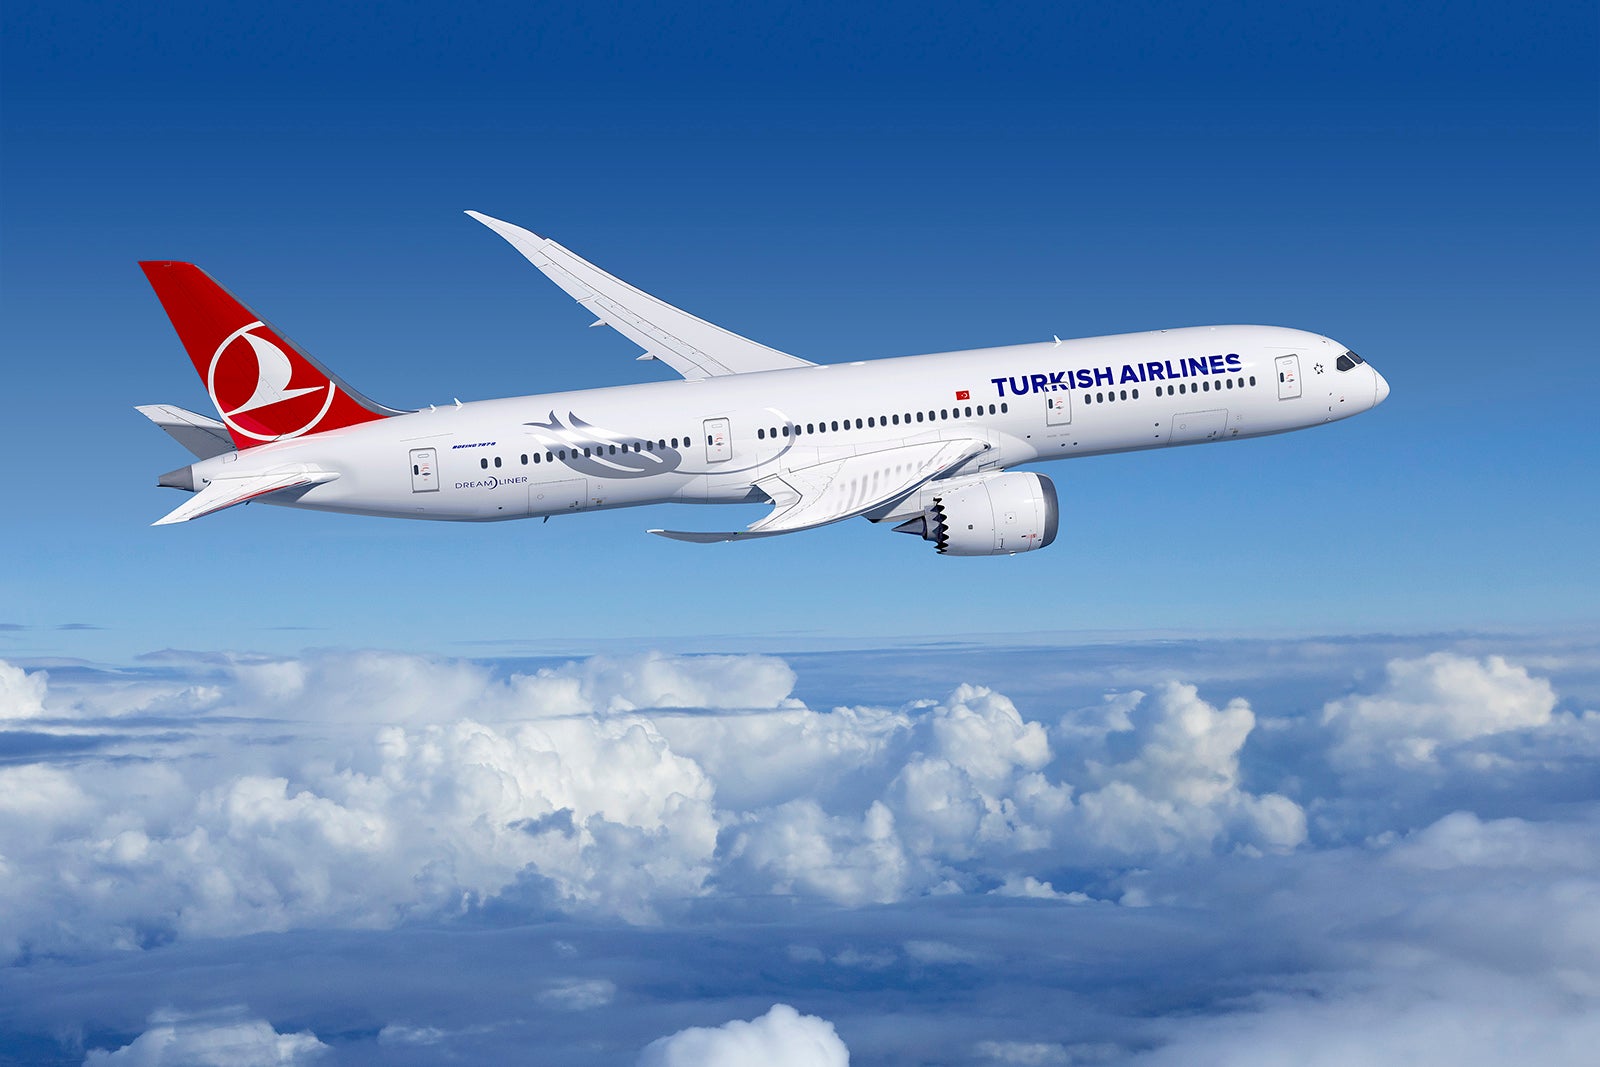 Turkish Airlines Dreamliner aircraft in flight